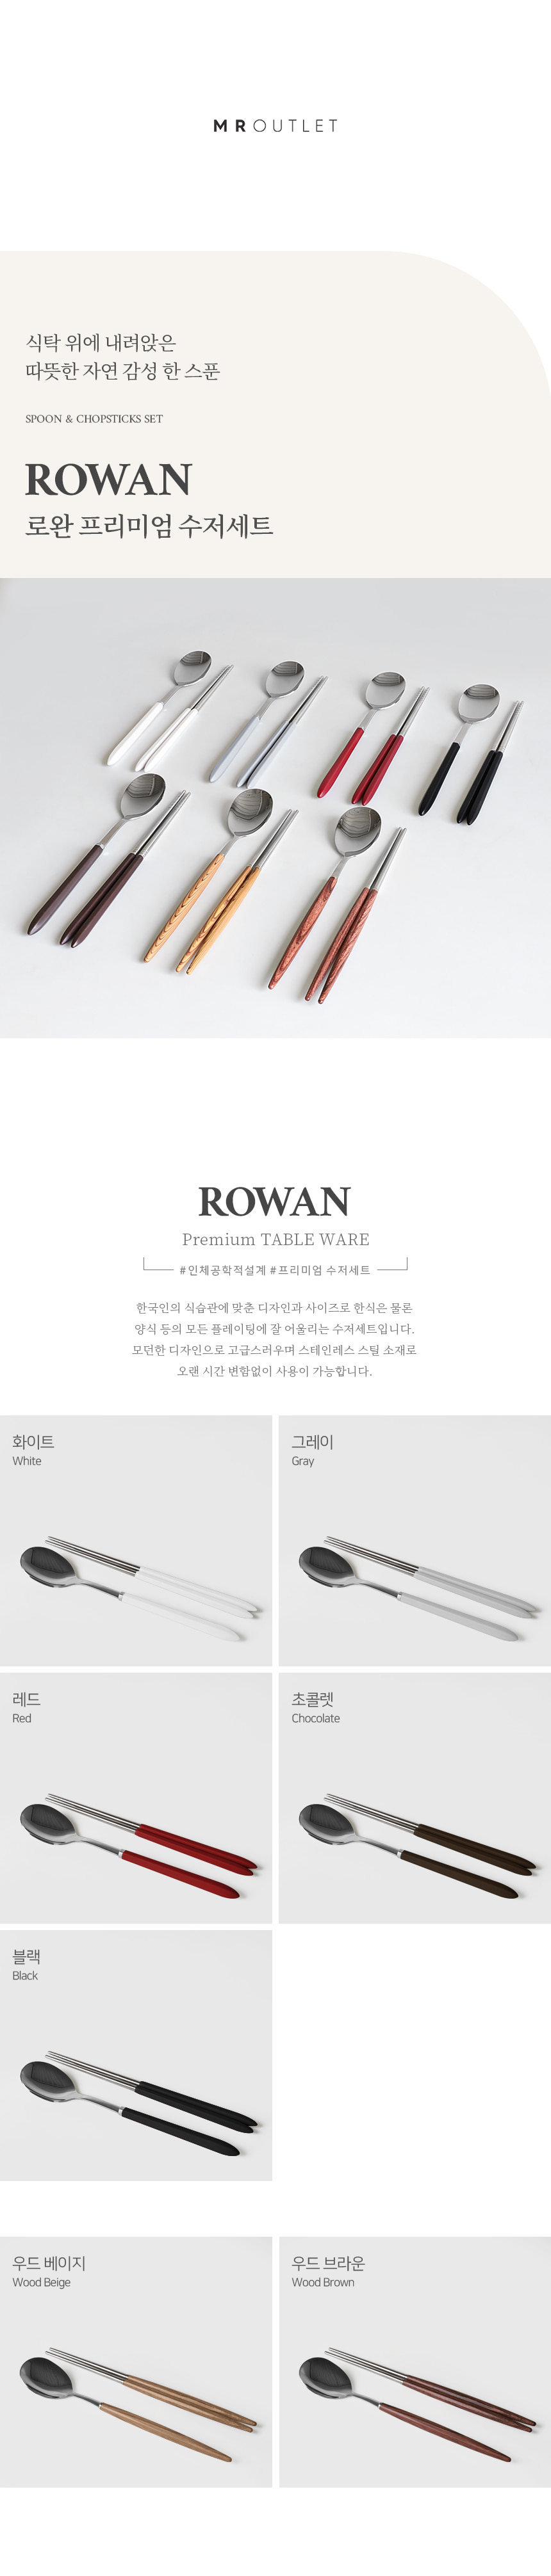 Rowan_cutleryset_01.jpg